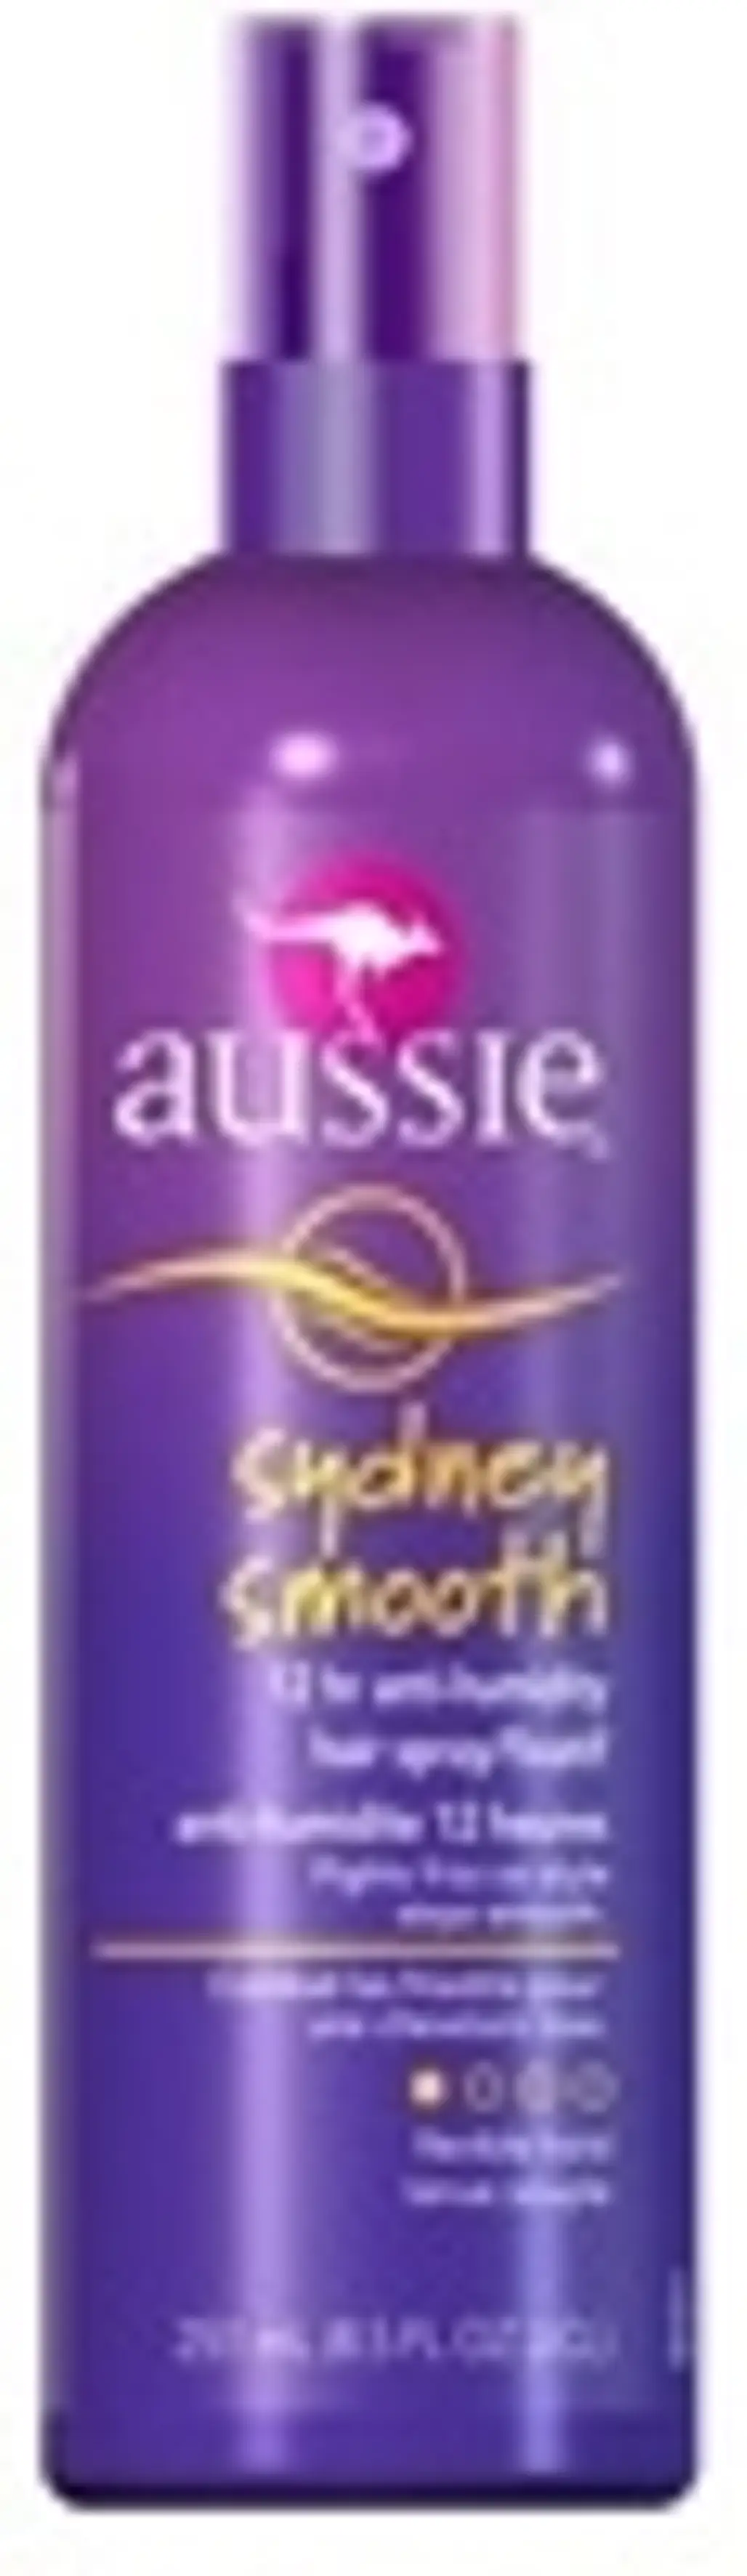 Aussie Sydney Smooth 12 Hour anti-Humidity Hair Spray